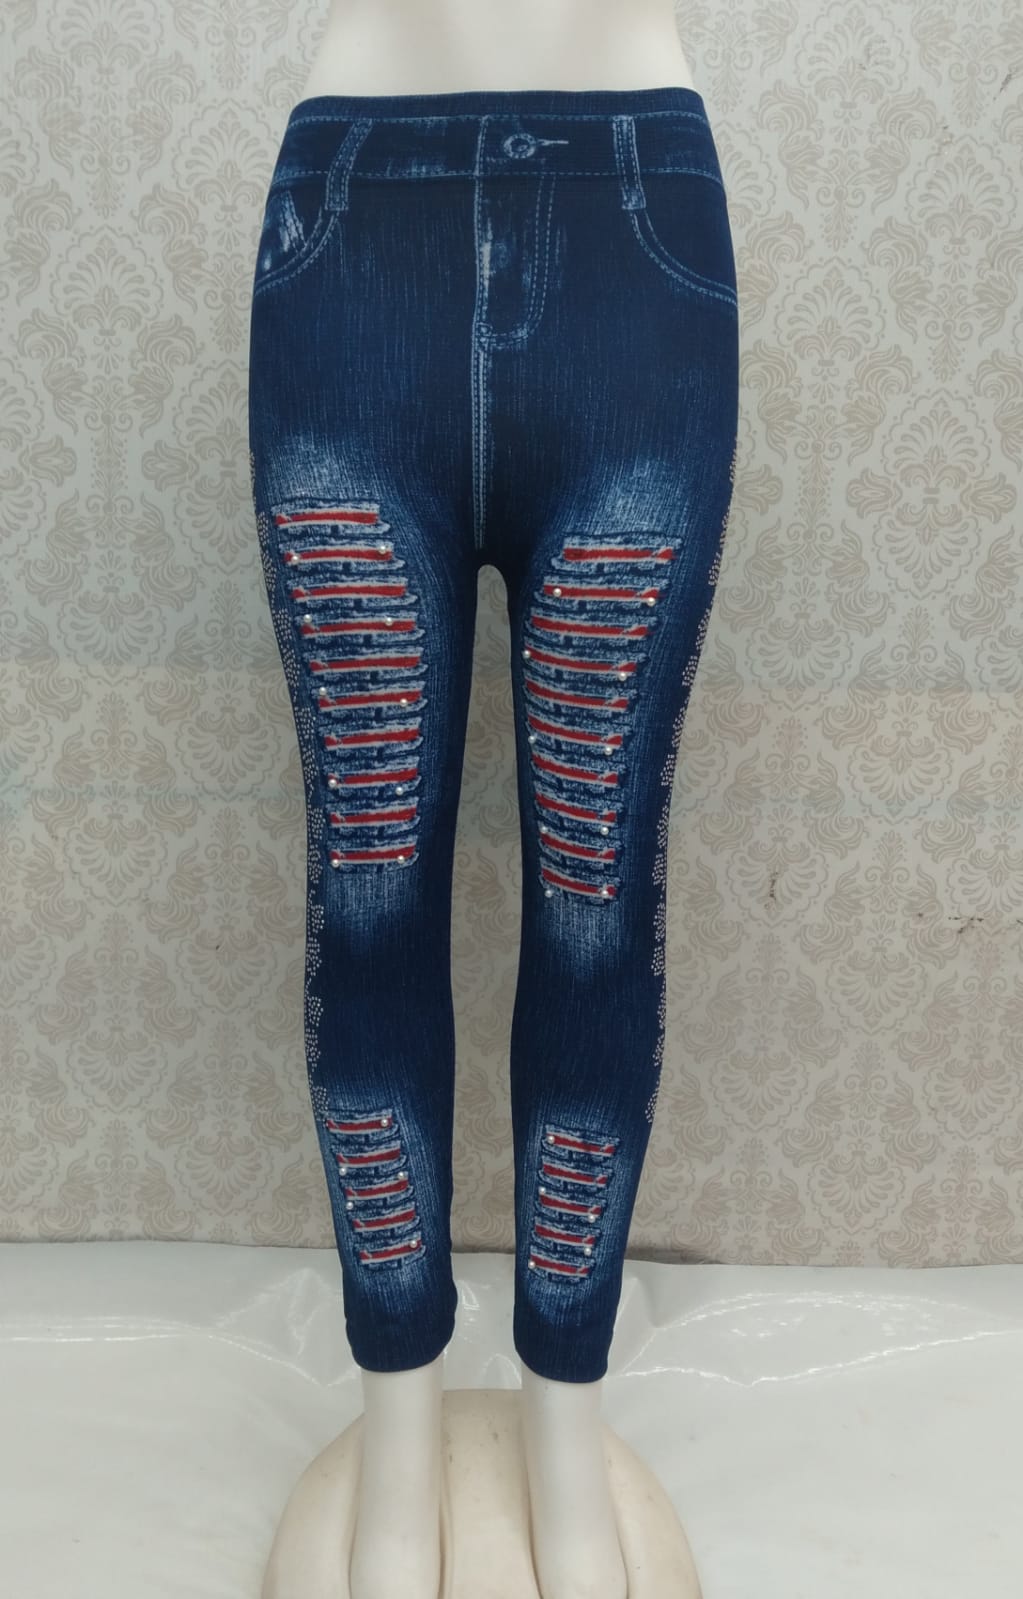 Leggings Womens Jeans - Buy Leggings Womens Jeans Online at Best Prices In  India